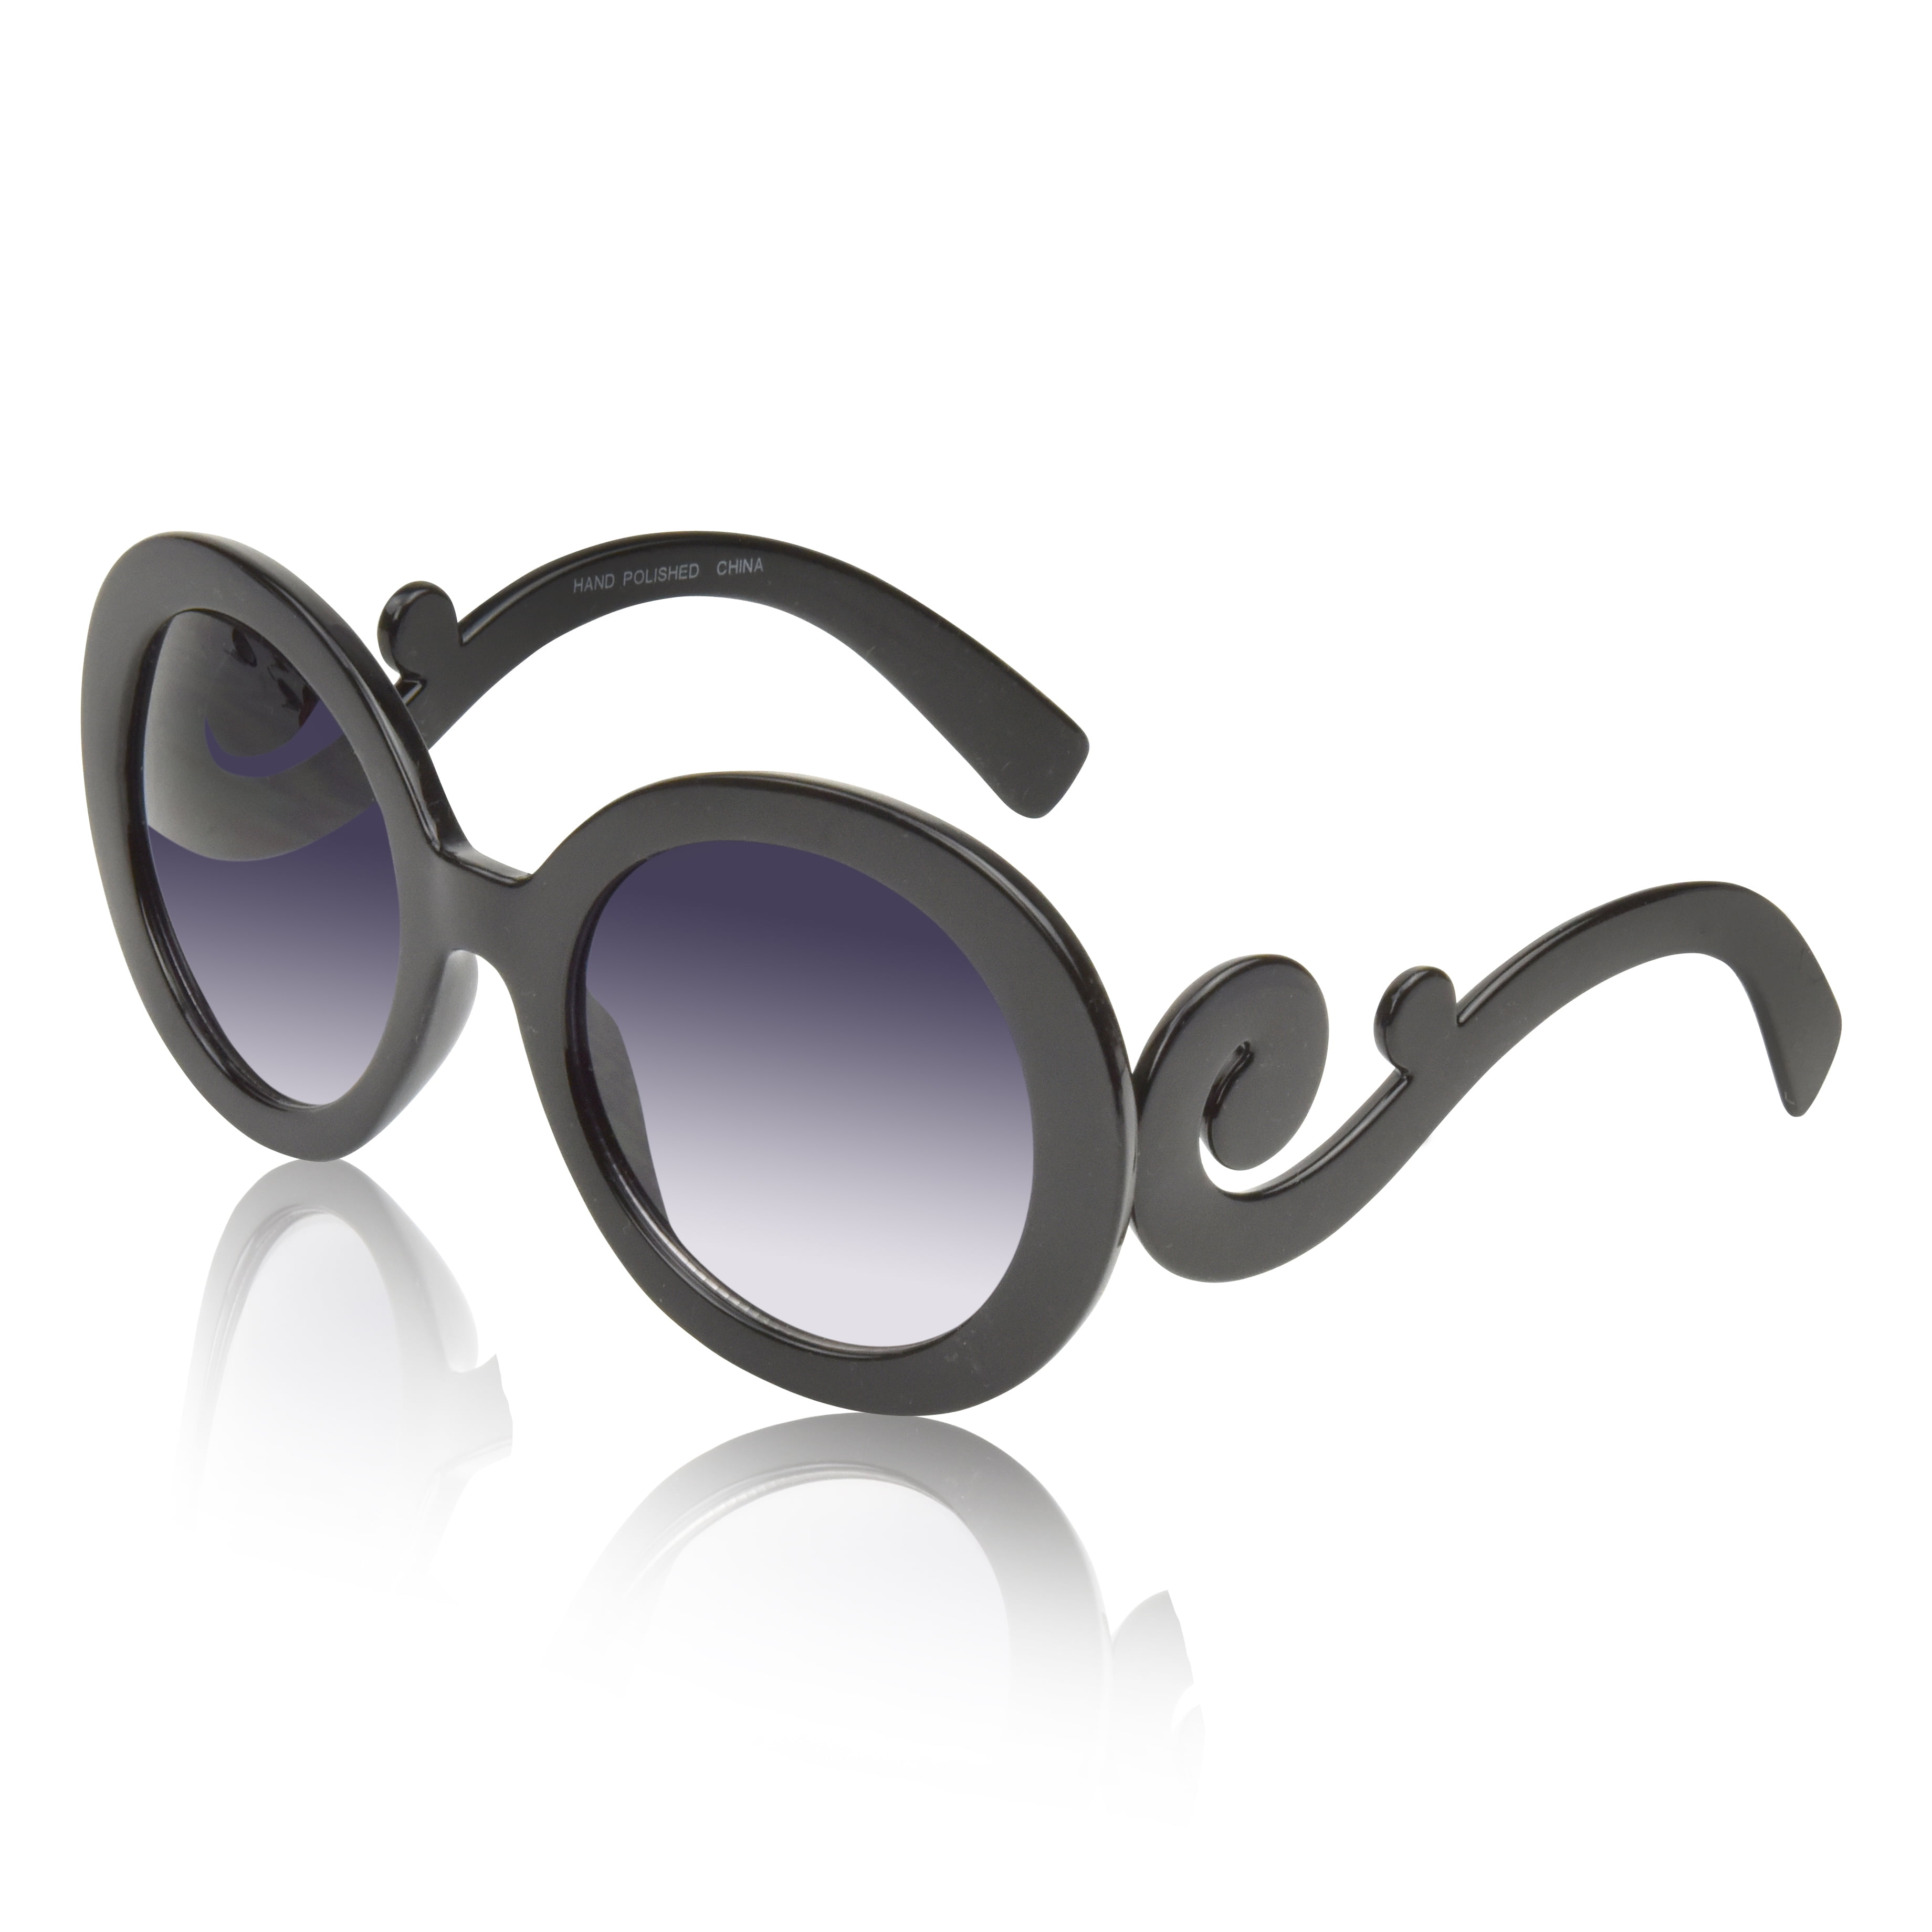 Sunny Pro Round Sunglasses for Women Big Designer Baroque Swirl Temple UV400 Protection, Women's, Size: One size, Black